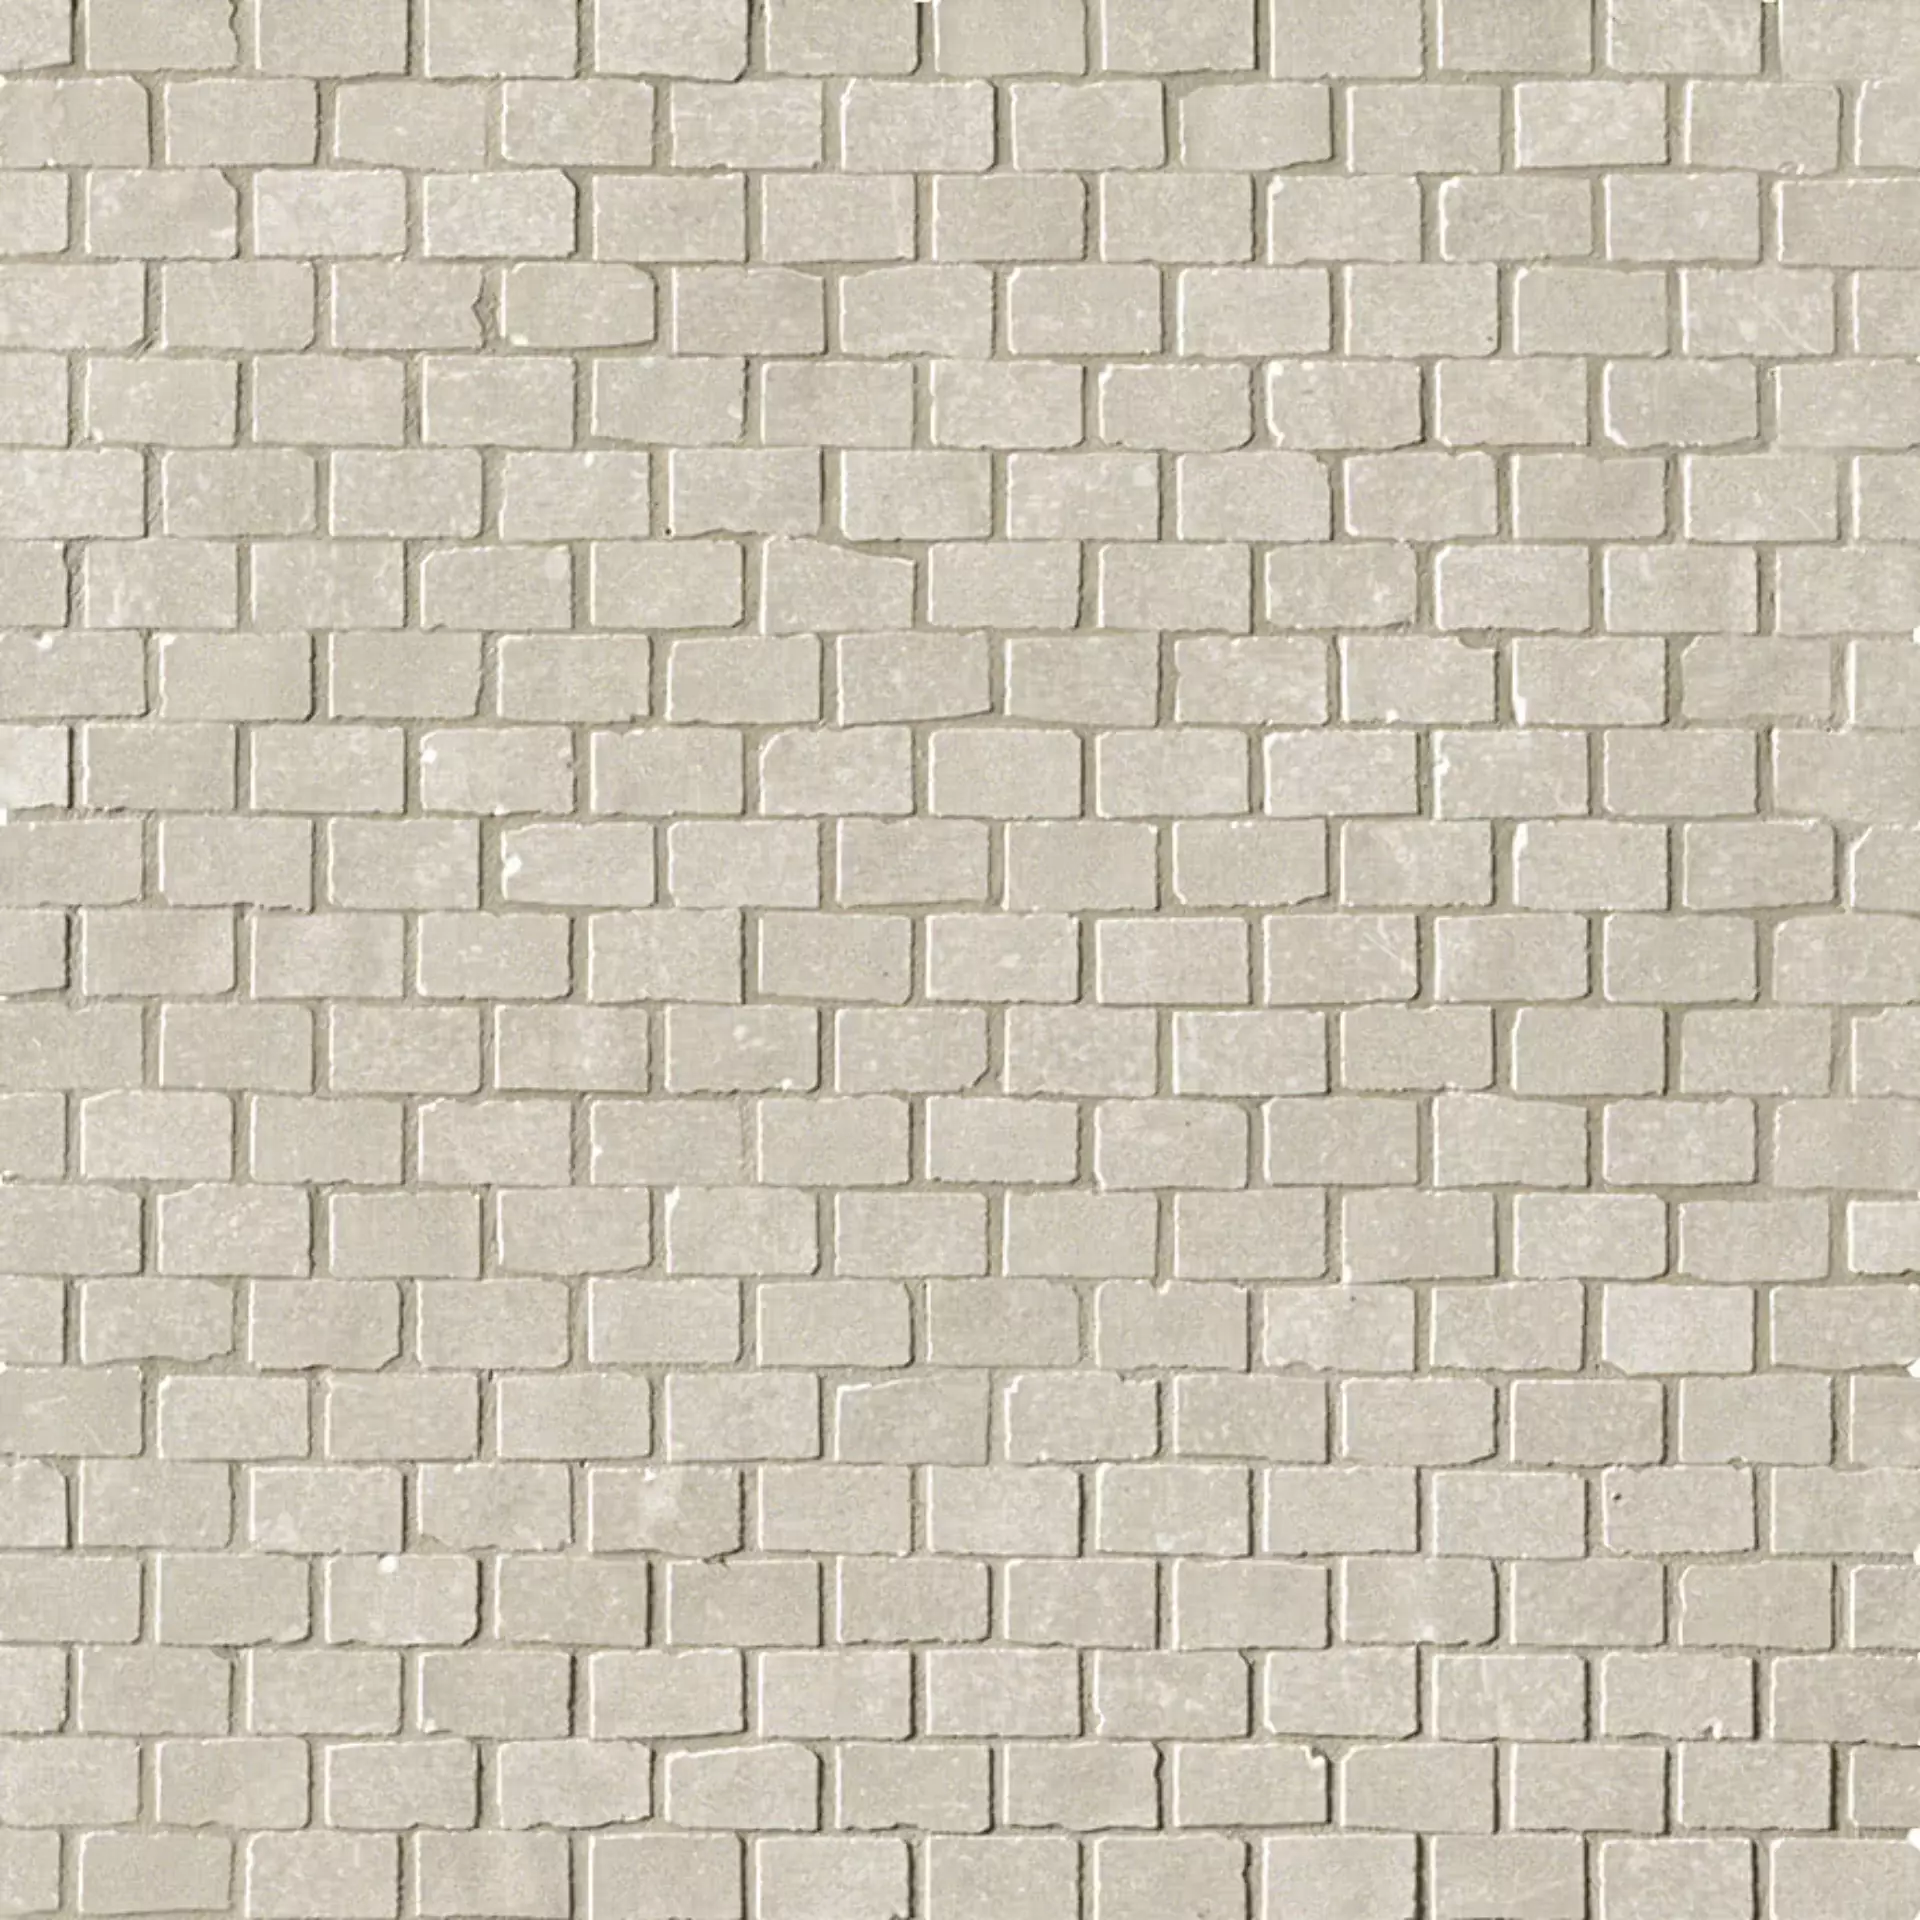 FAP Maku Grey Anticato Mosaic Brick fMJ6 30,5x30,5cm